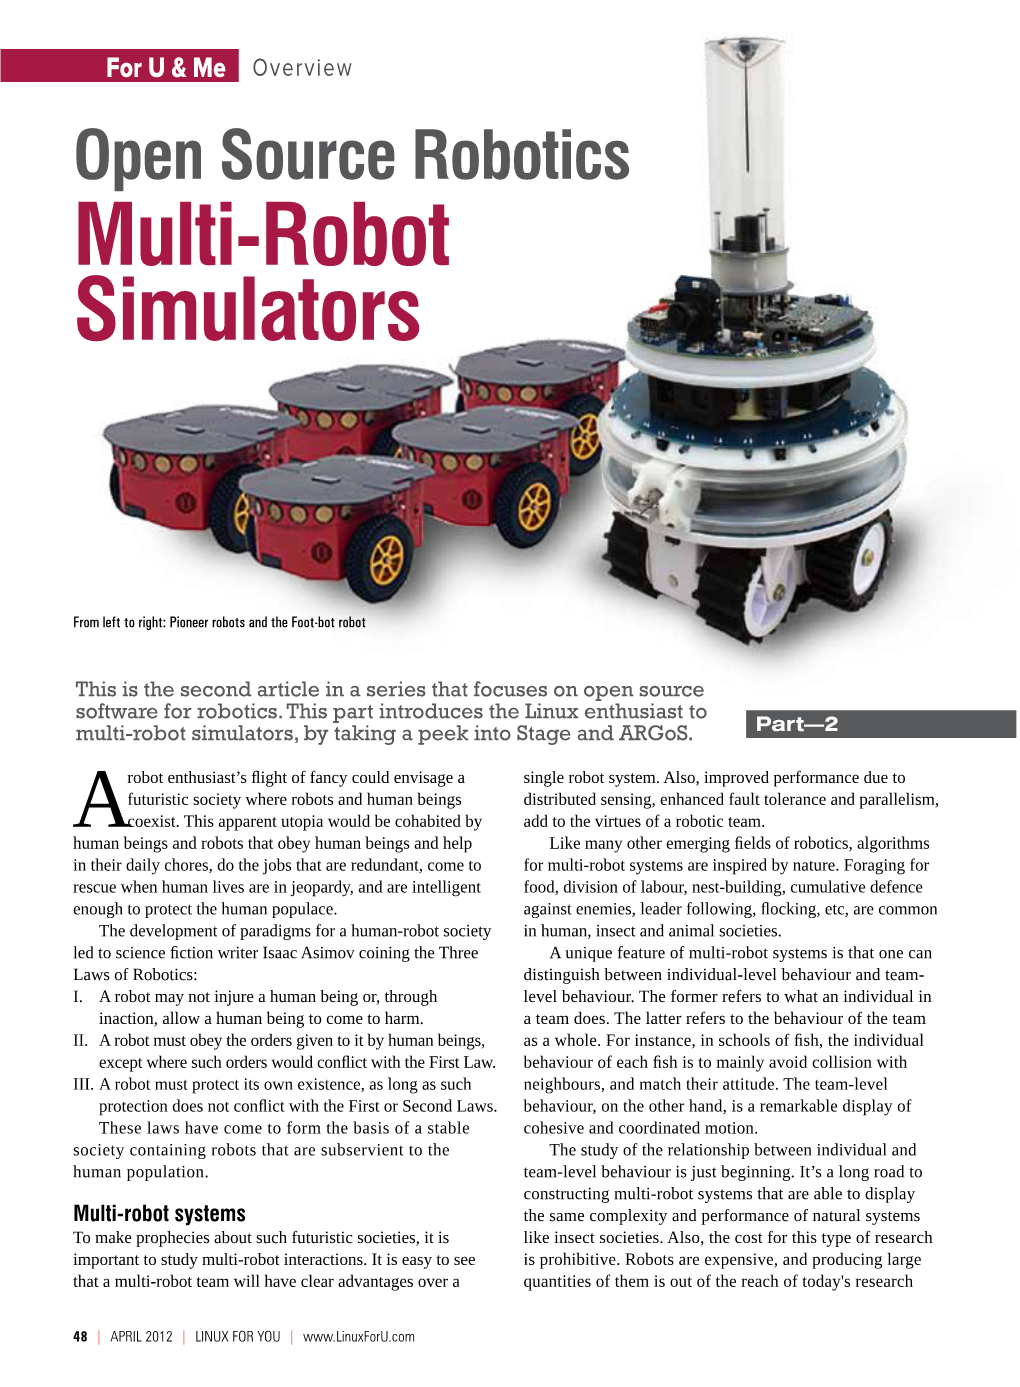 Multi-Robot Simulators